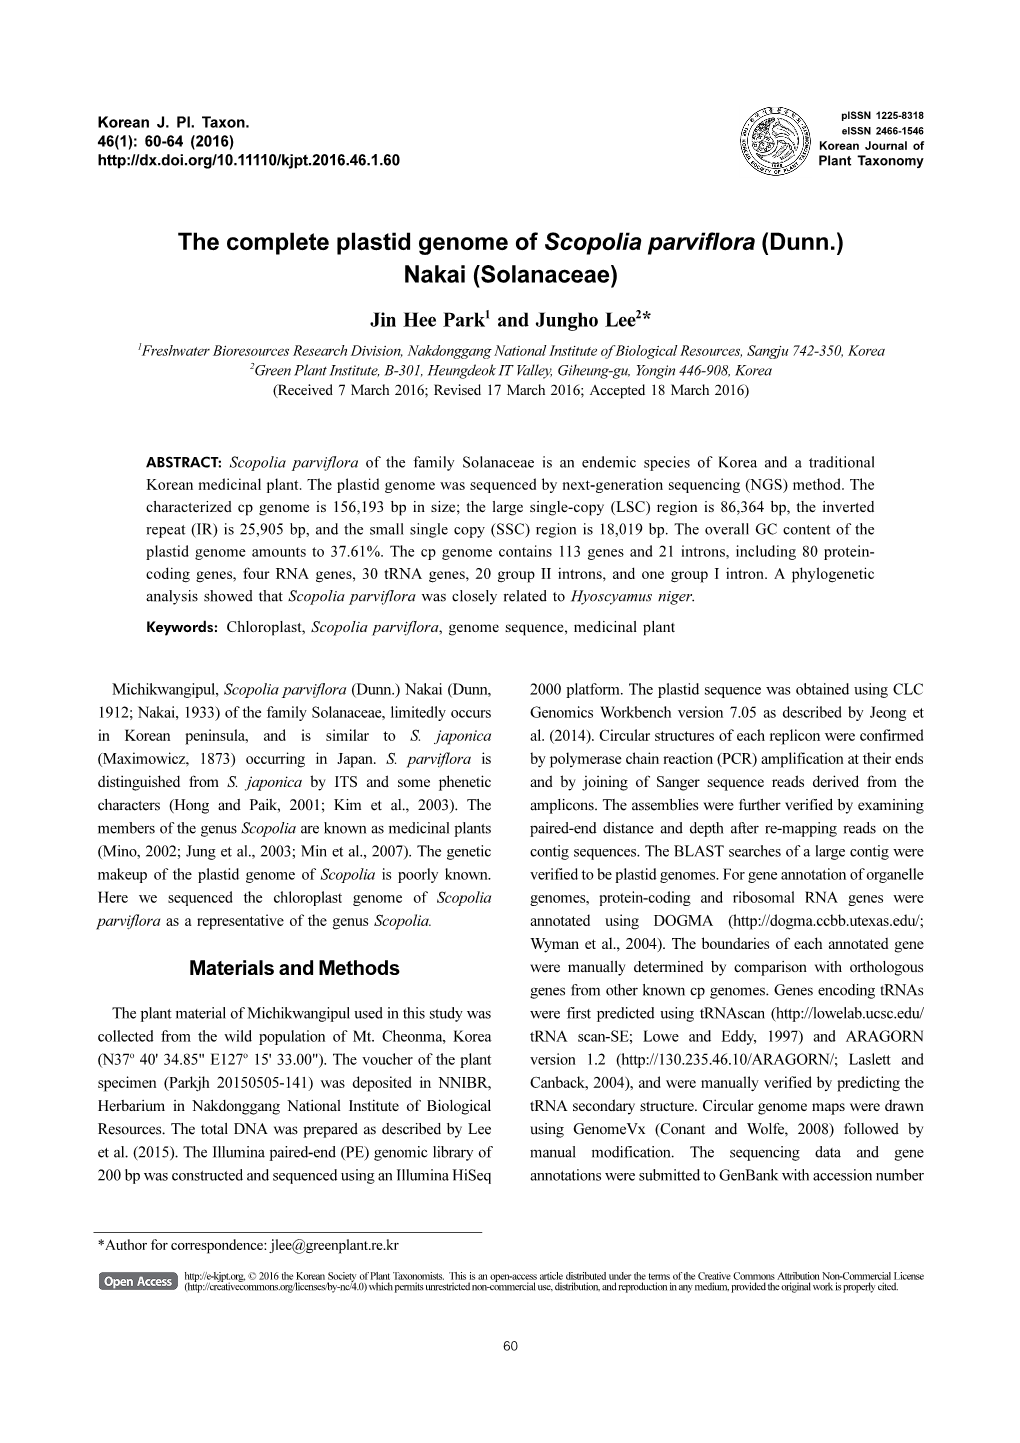 The Complete Plastid Genome of Scopolia Parviflora (Dunn.) Nakai (Solanaceae)